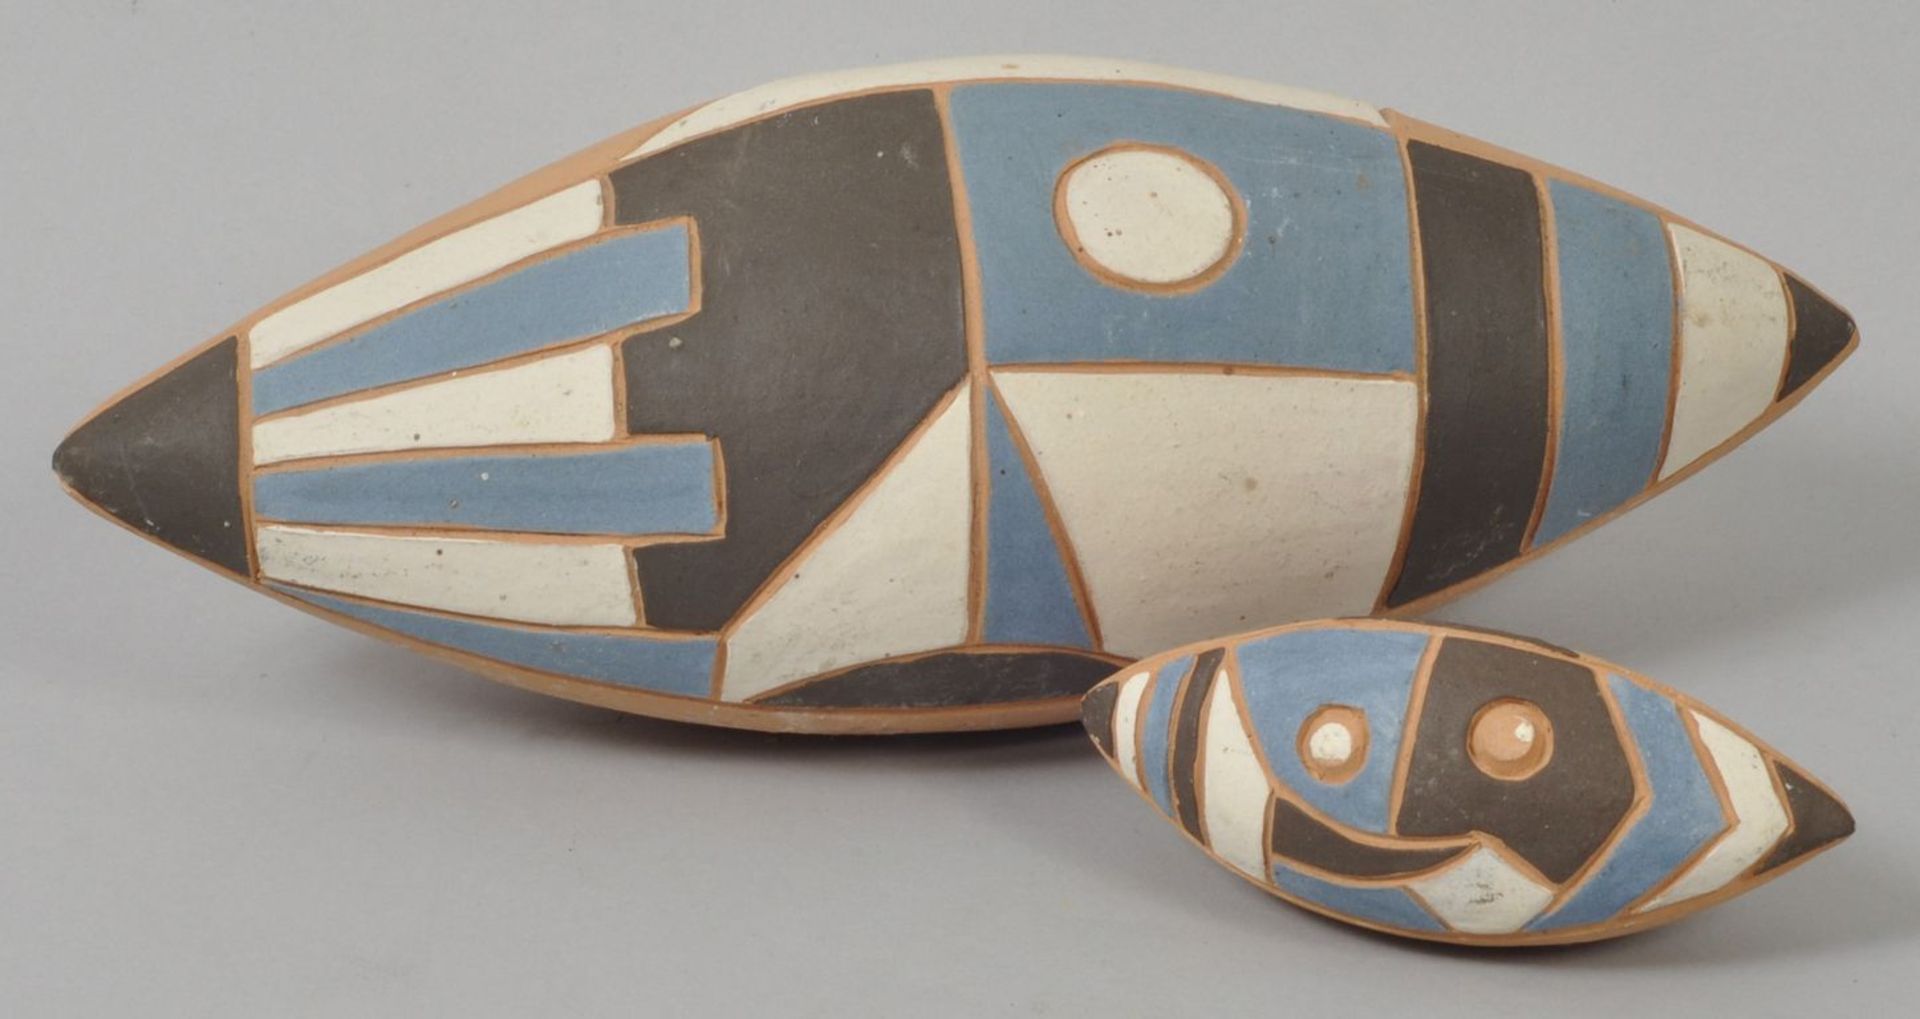 Zwei dekorative Keramiken, 2. H. 20. Jh.Keramik/Ton, spitzovale Form, geometrisches Ritzdekor und